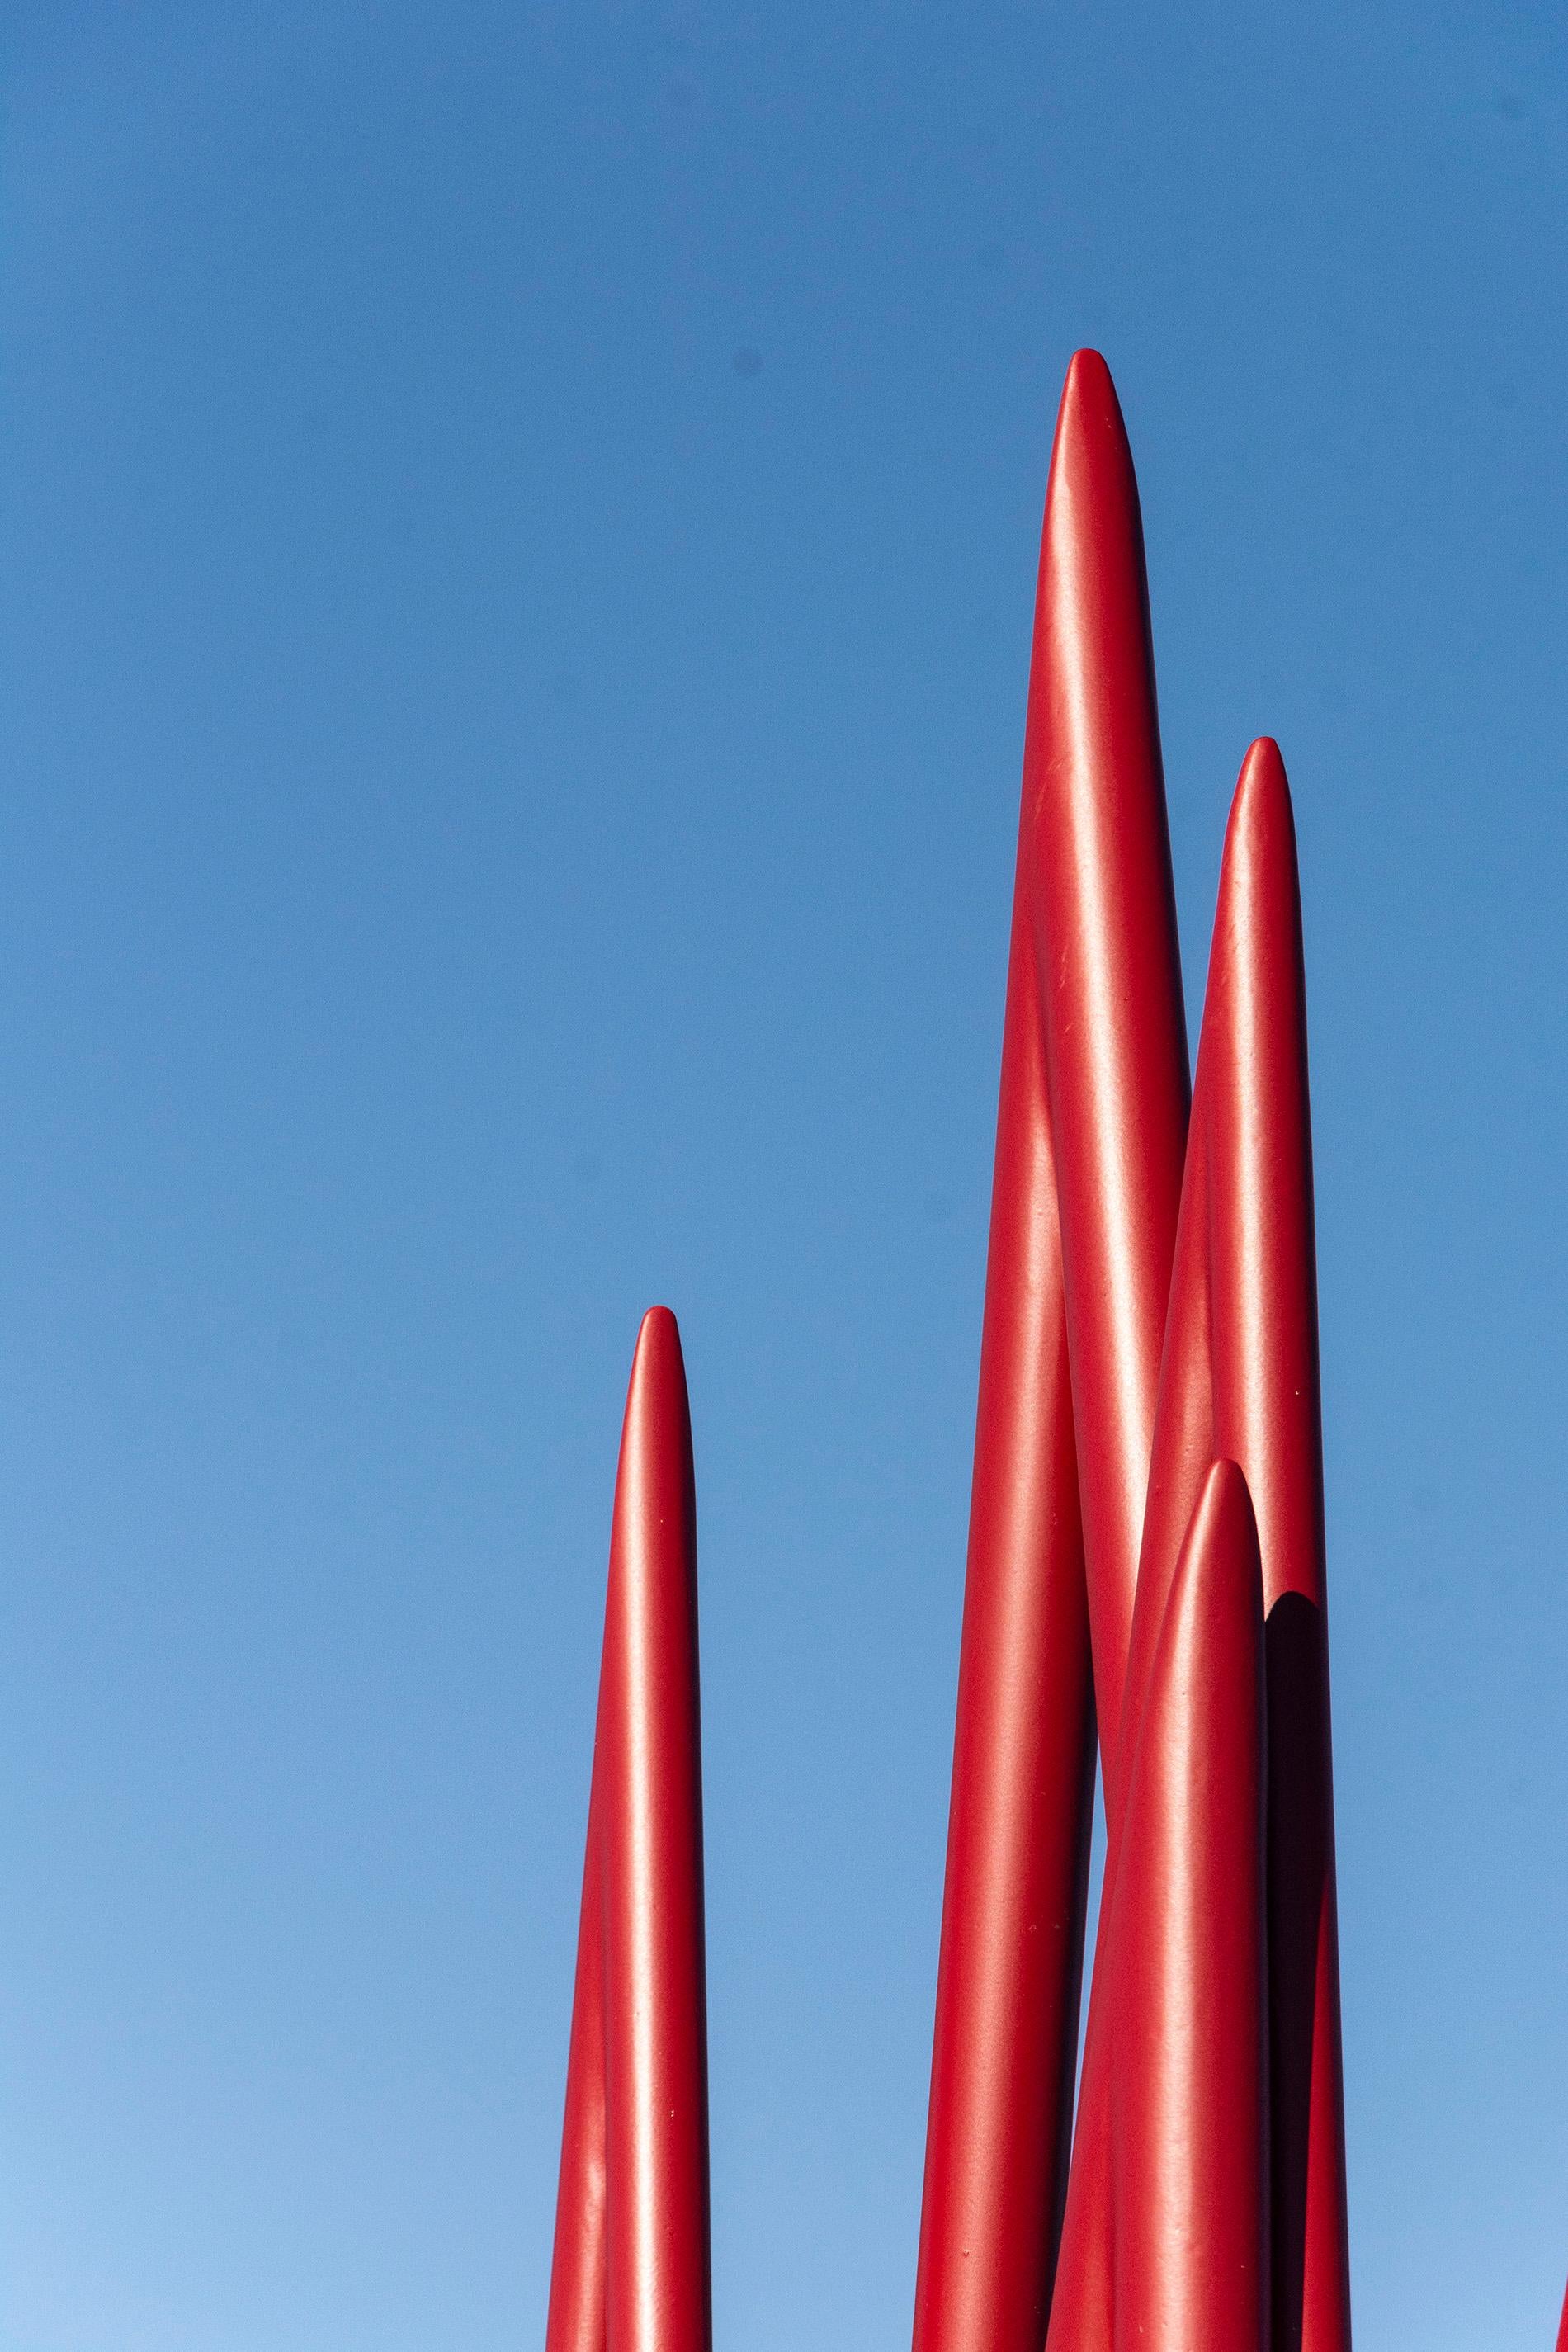 red spires